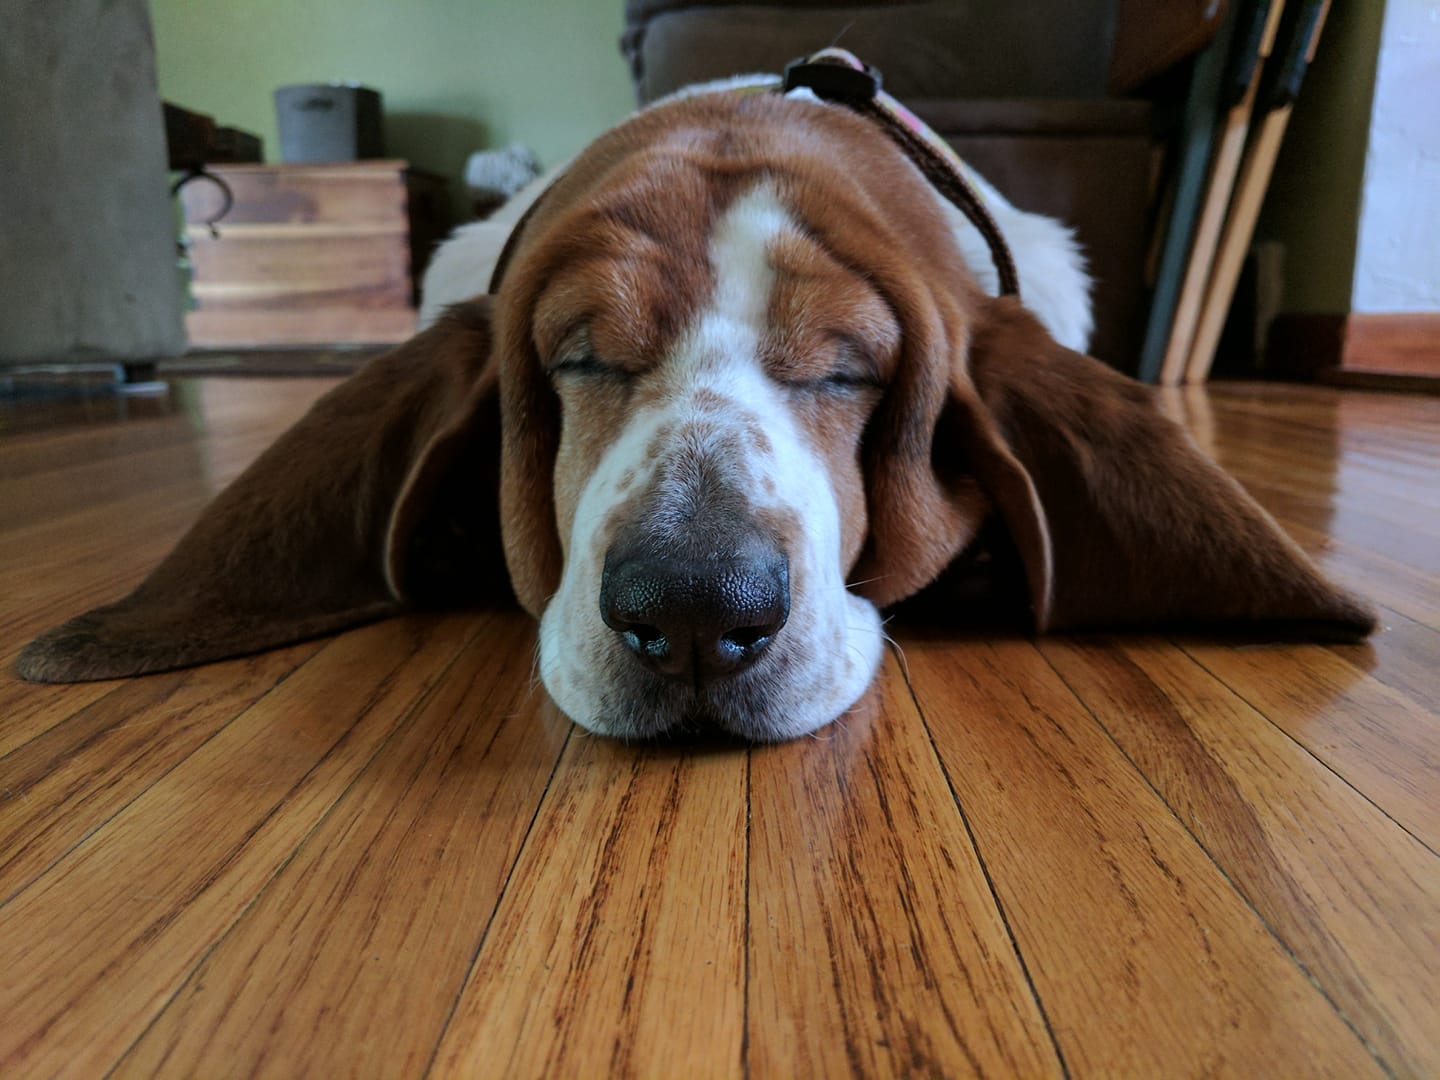 A Basset Hound sleeping on the floor